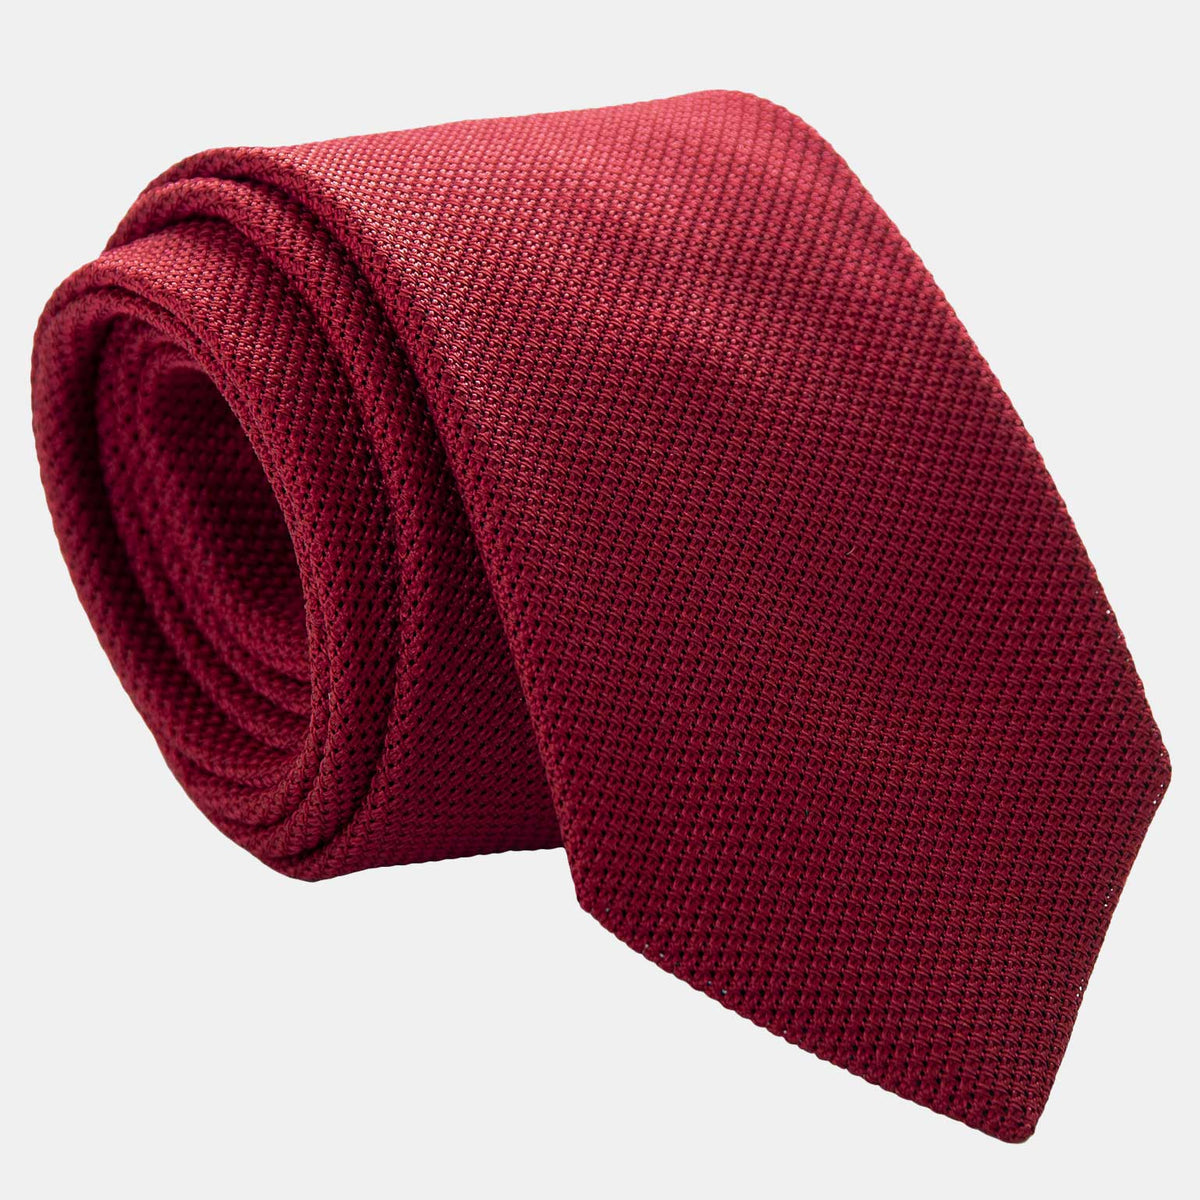 Luxury handmade Italian red grenadine tie